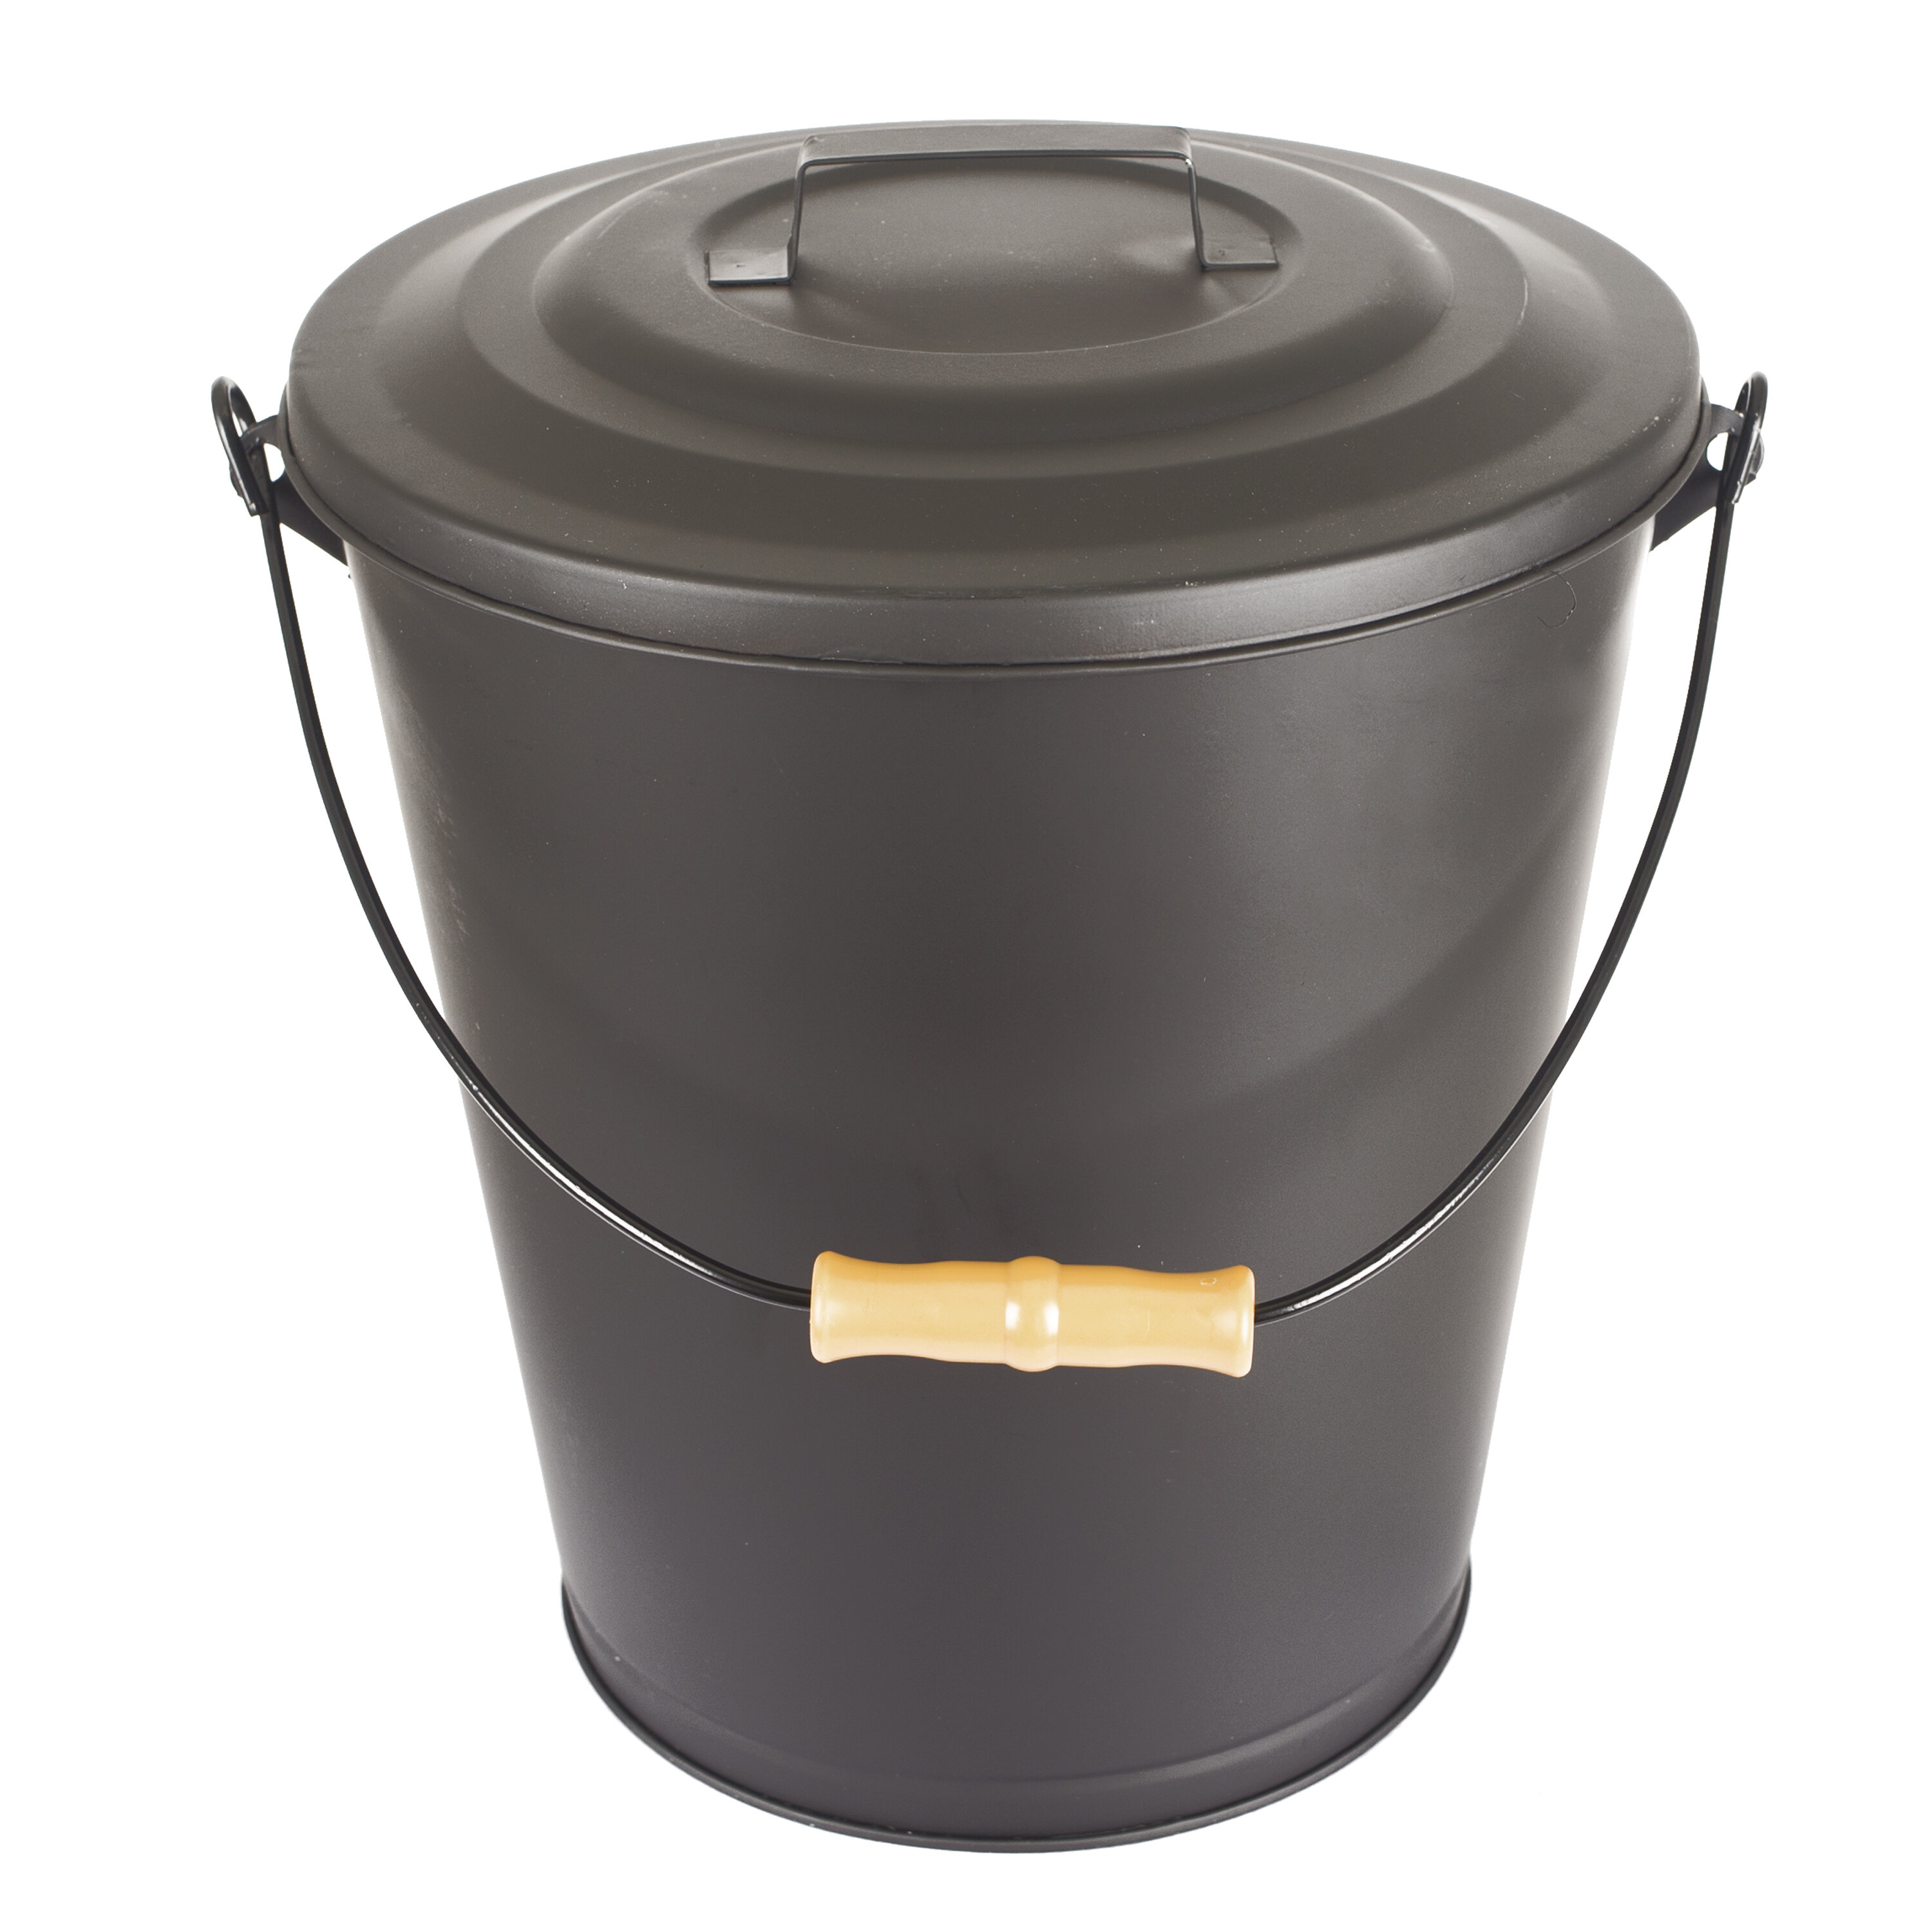 Gracie Oaks Mamadou Portable Fireplace Ash Disposal Bin & Reviews | Wayfair